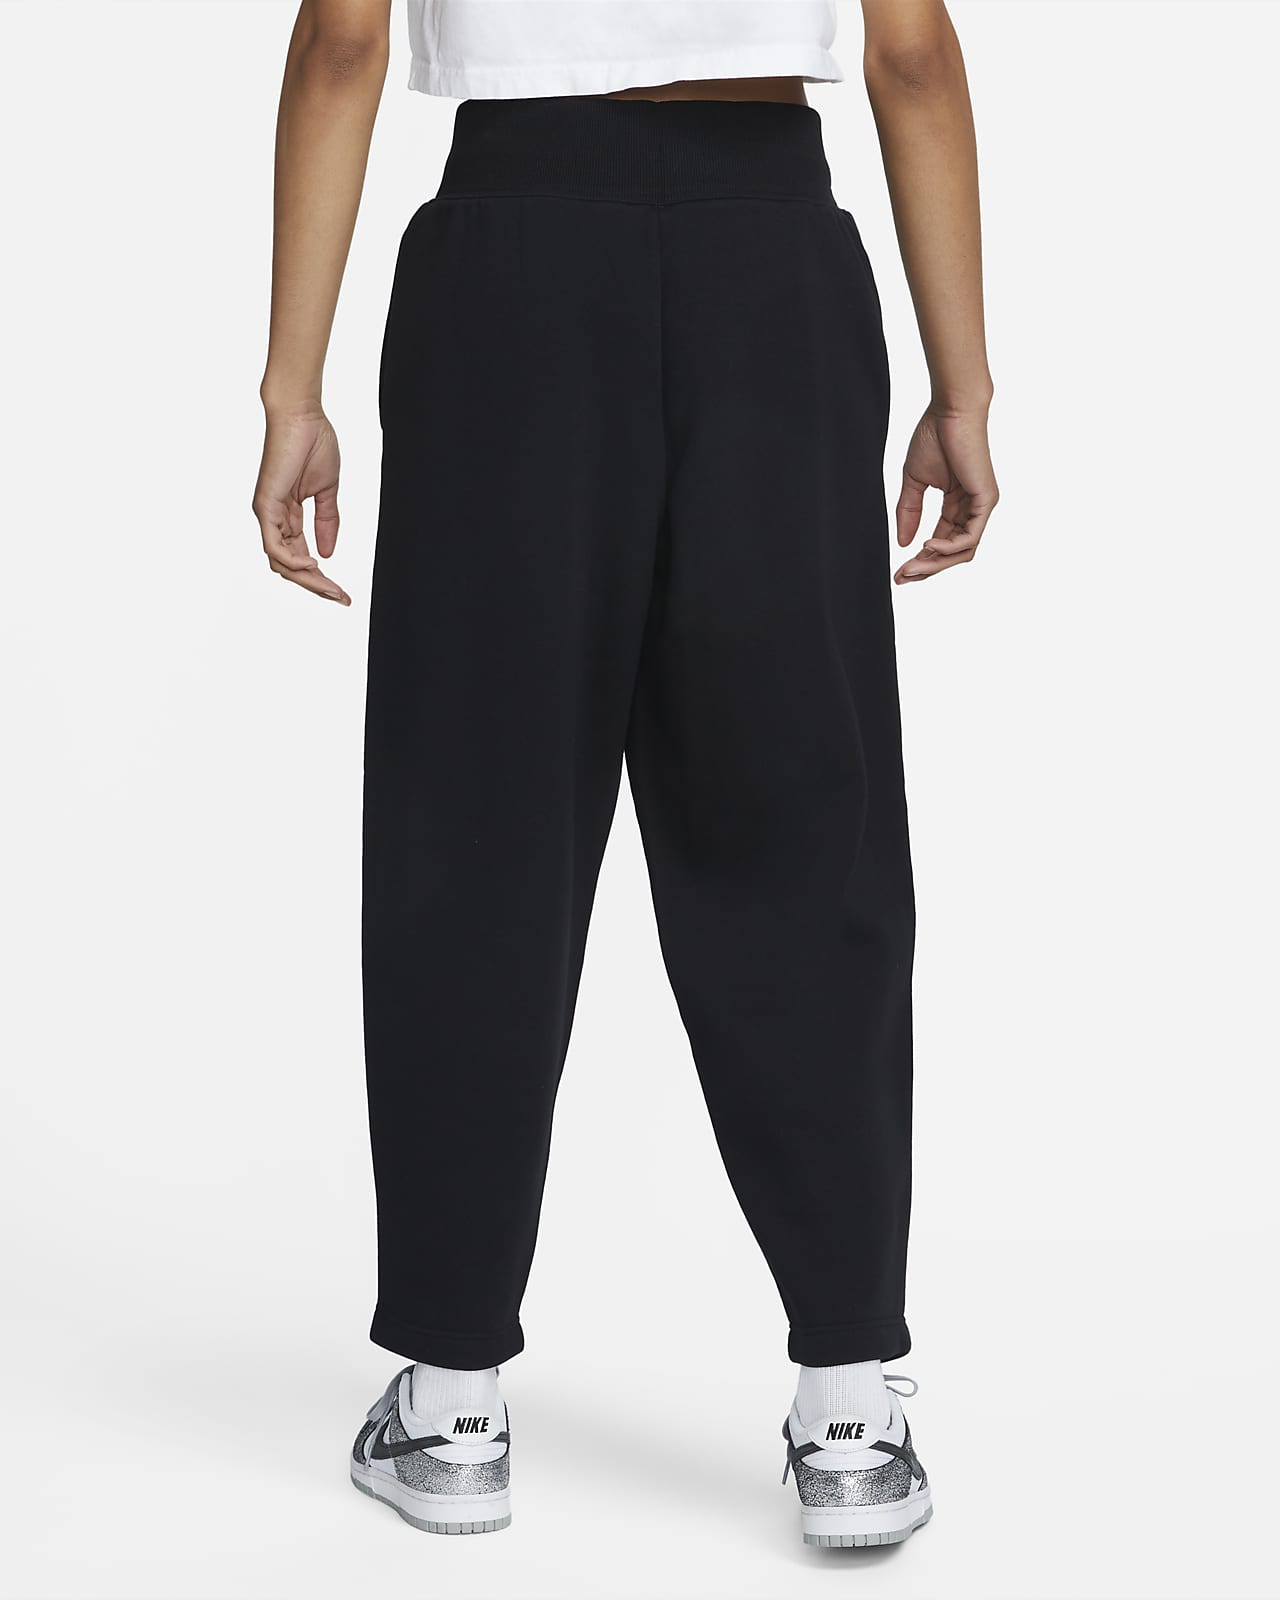 NWT Nike Women's Sportswear Phoenix Fleece High-Waisted Pants Size 2XL  DQ5688